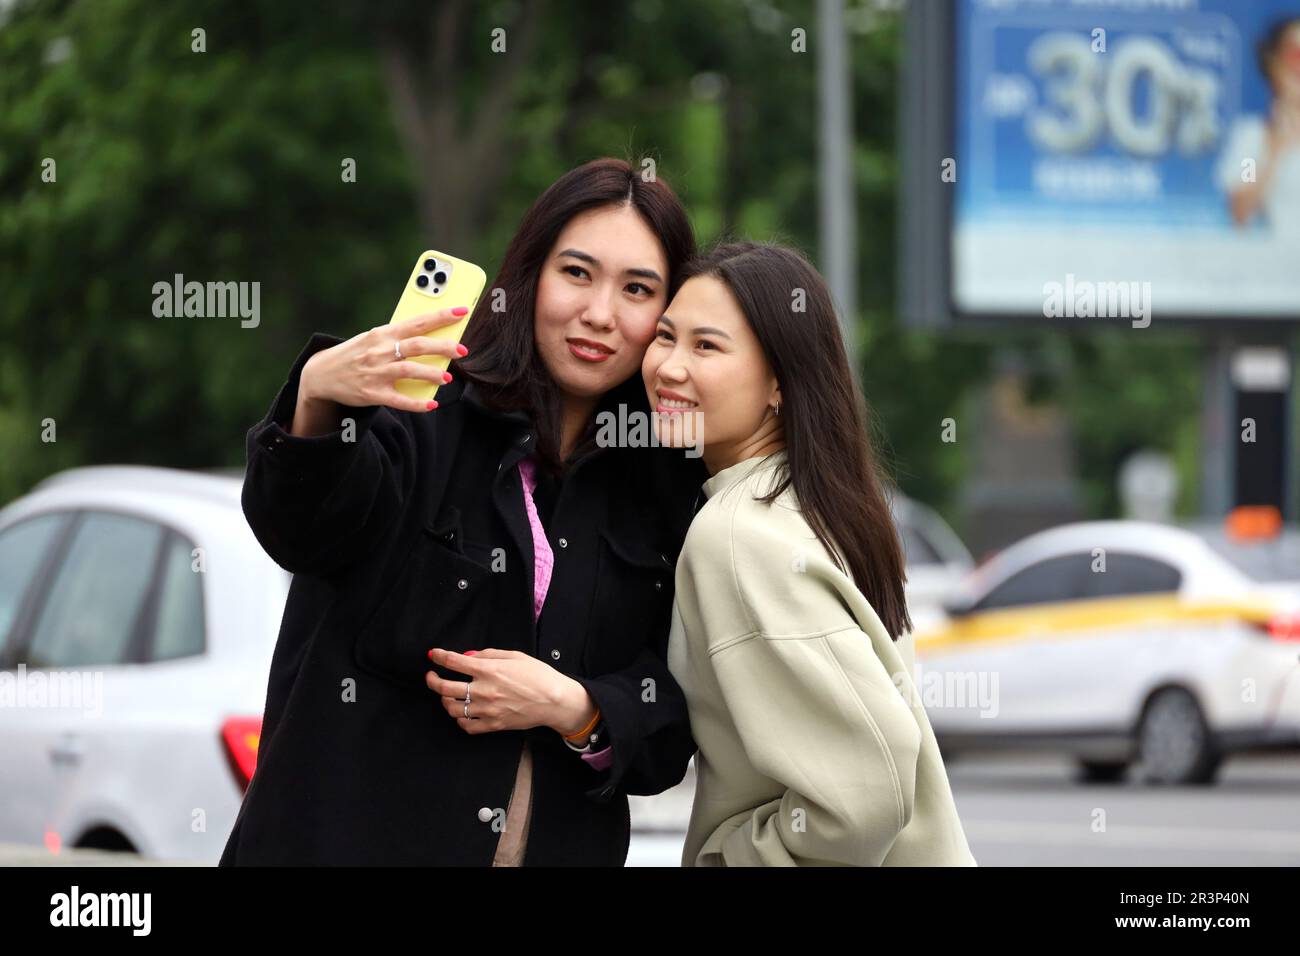 Asian girls taking selfie on smartphone camera while walking on city street Stock Photo